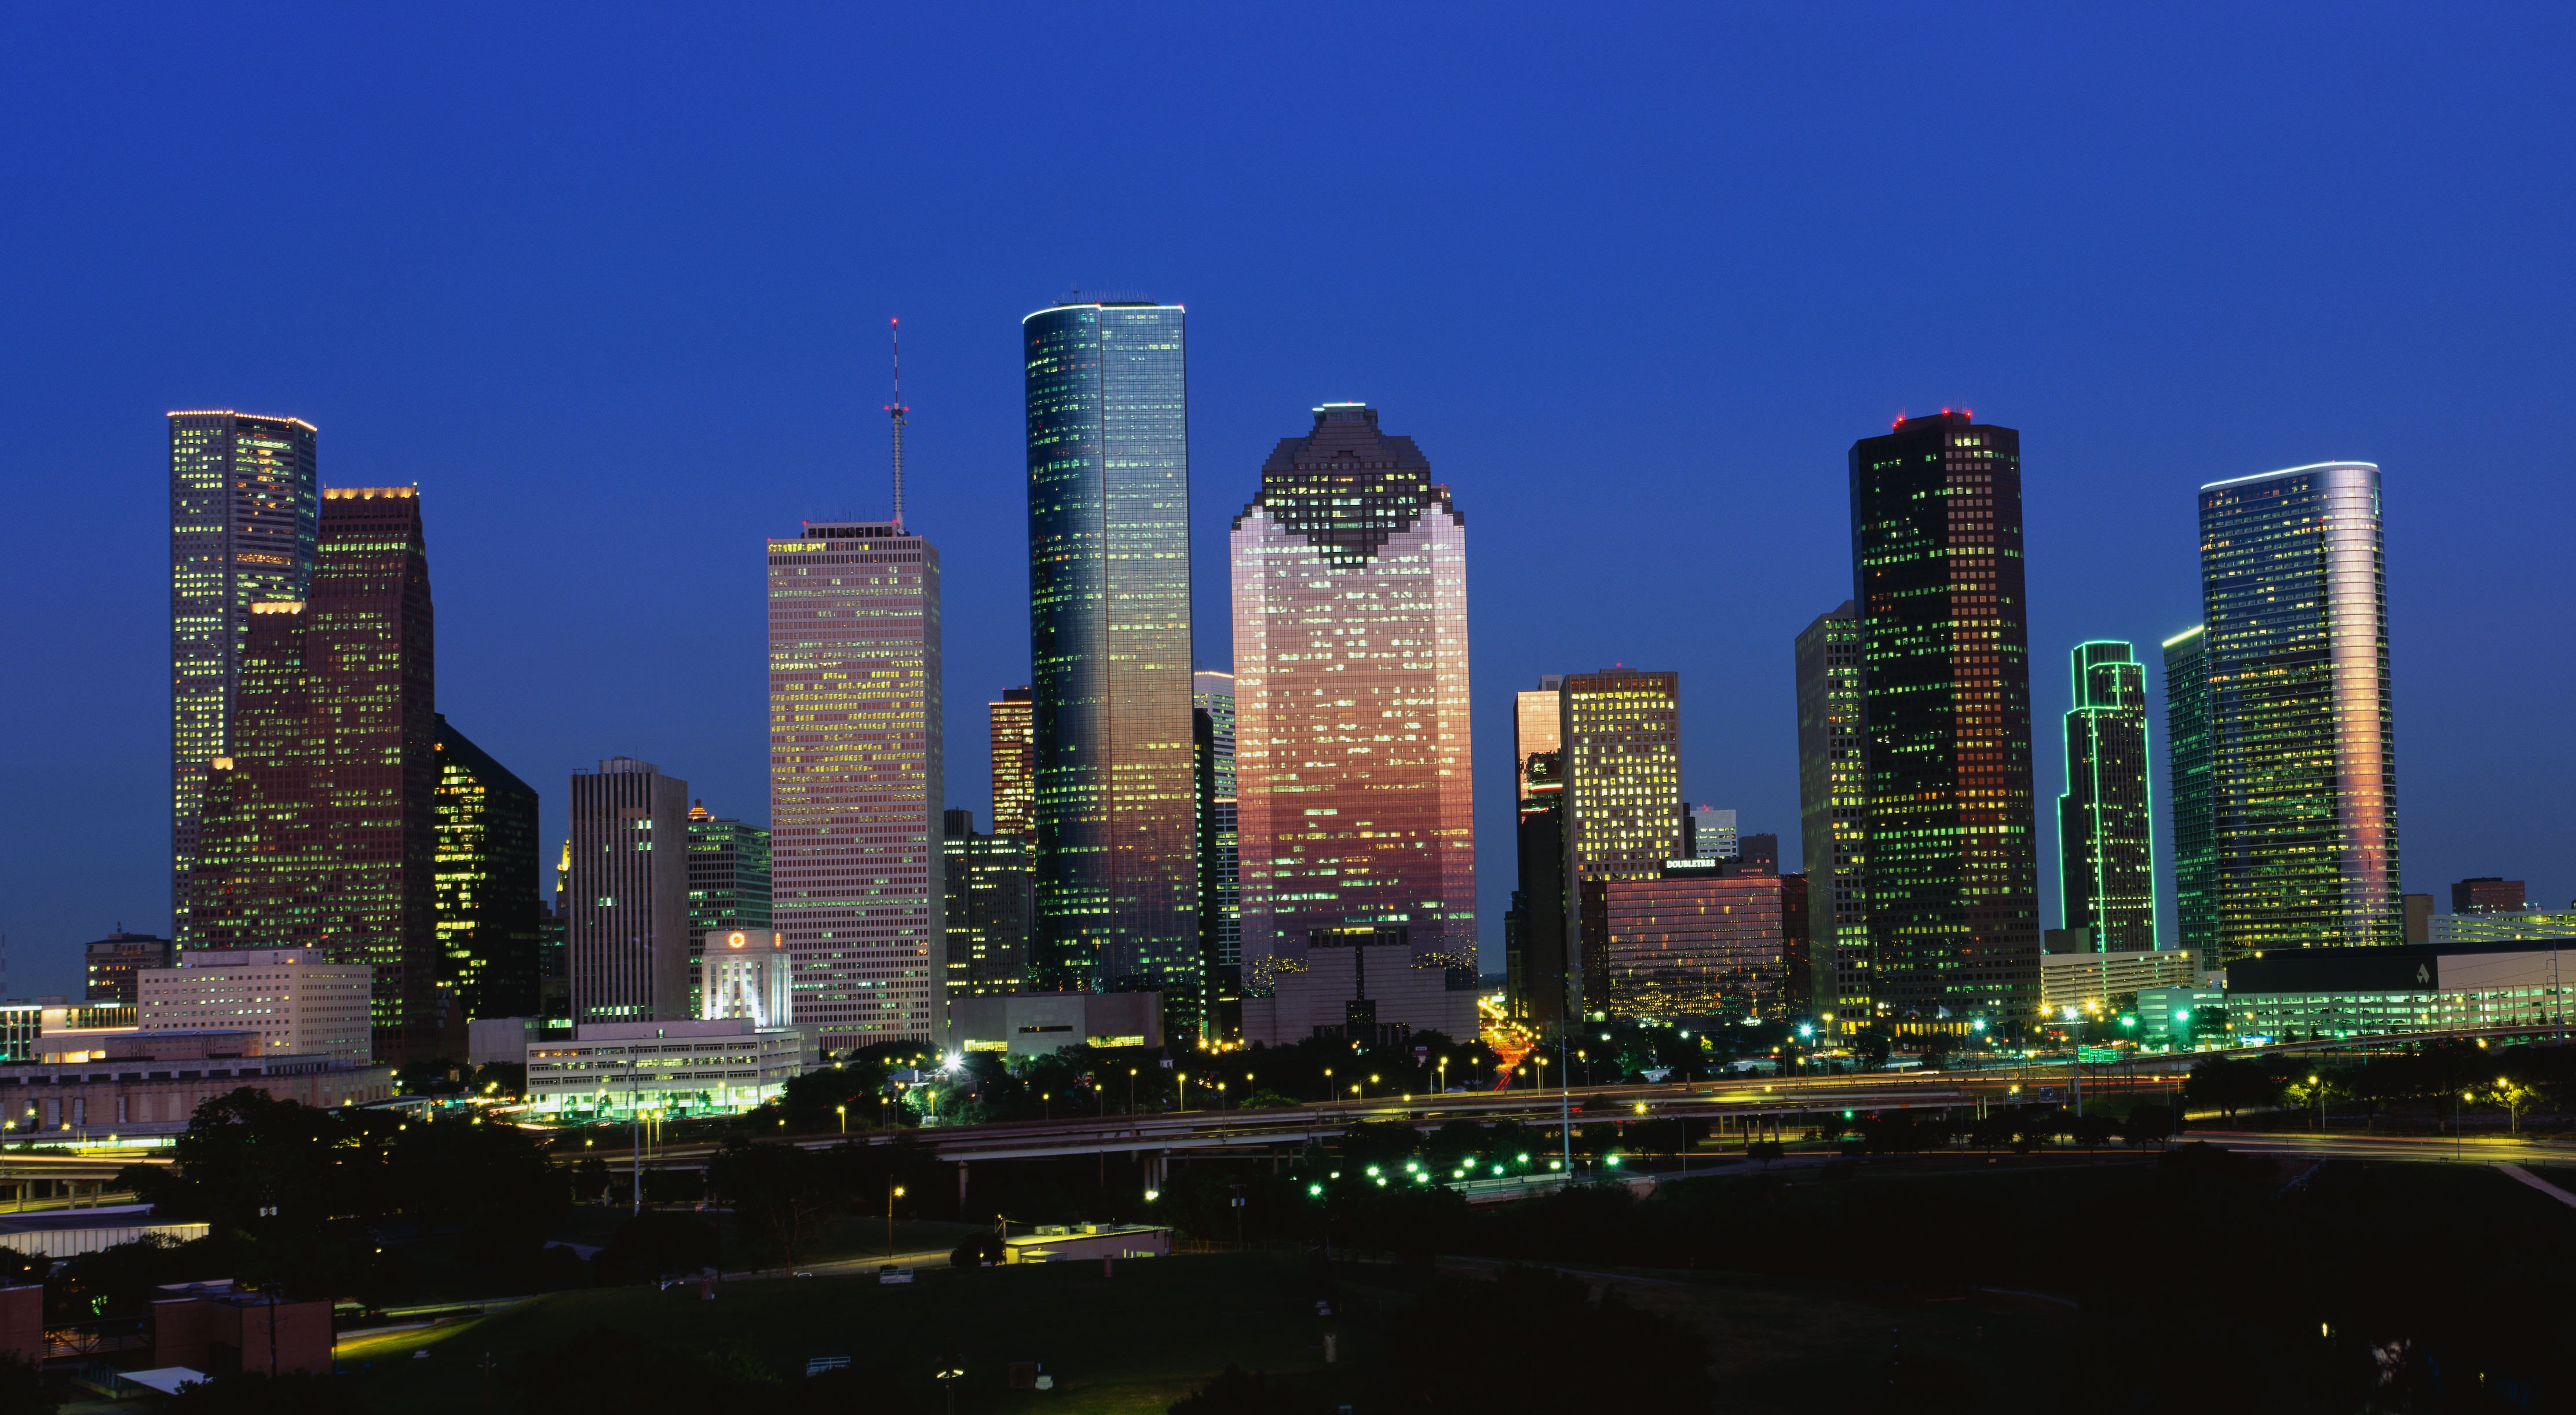 Houston Texas HOA Management services